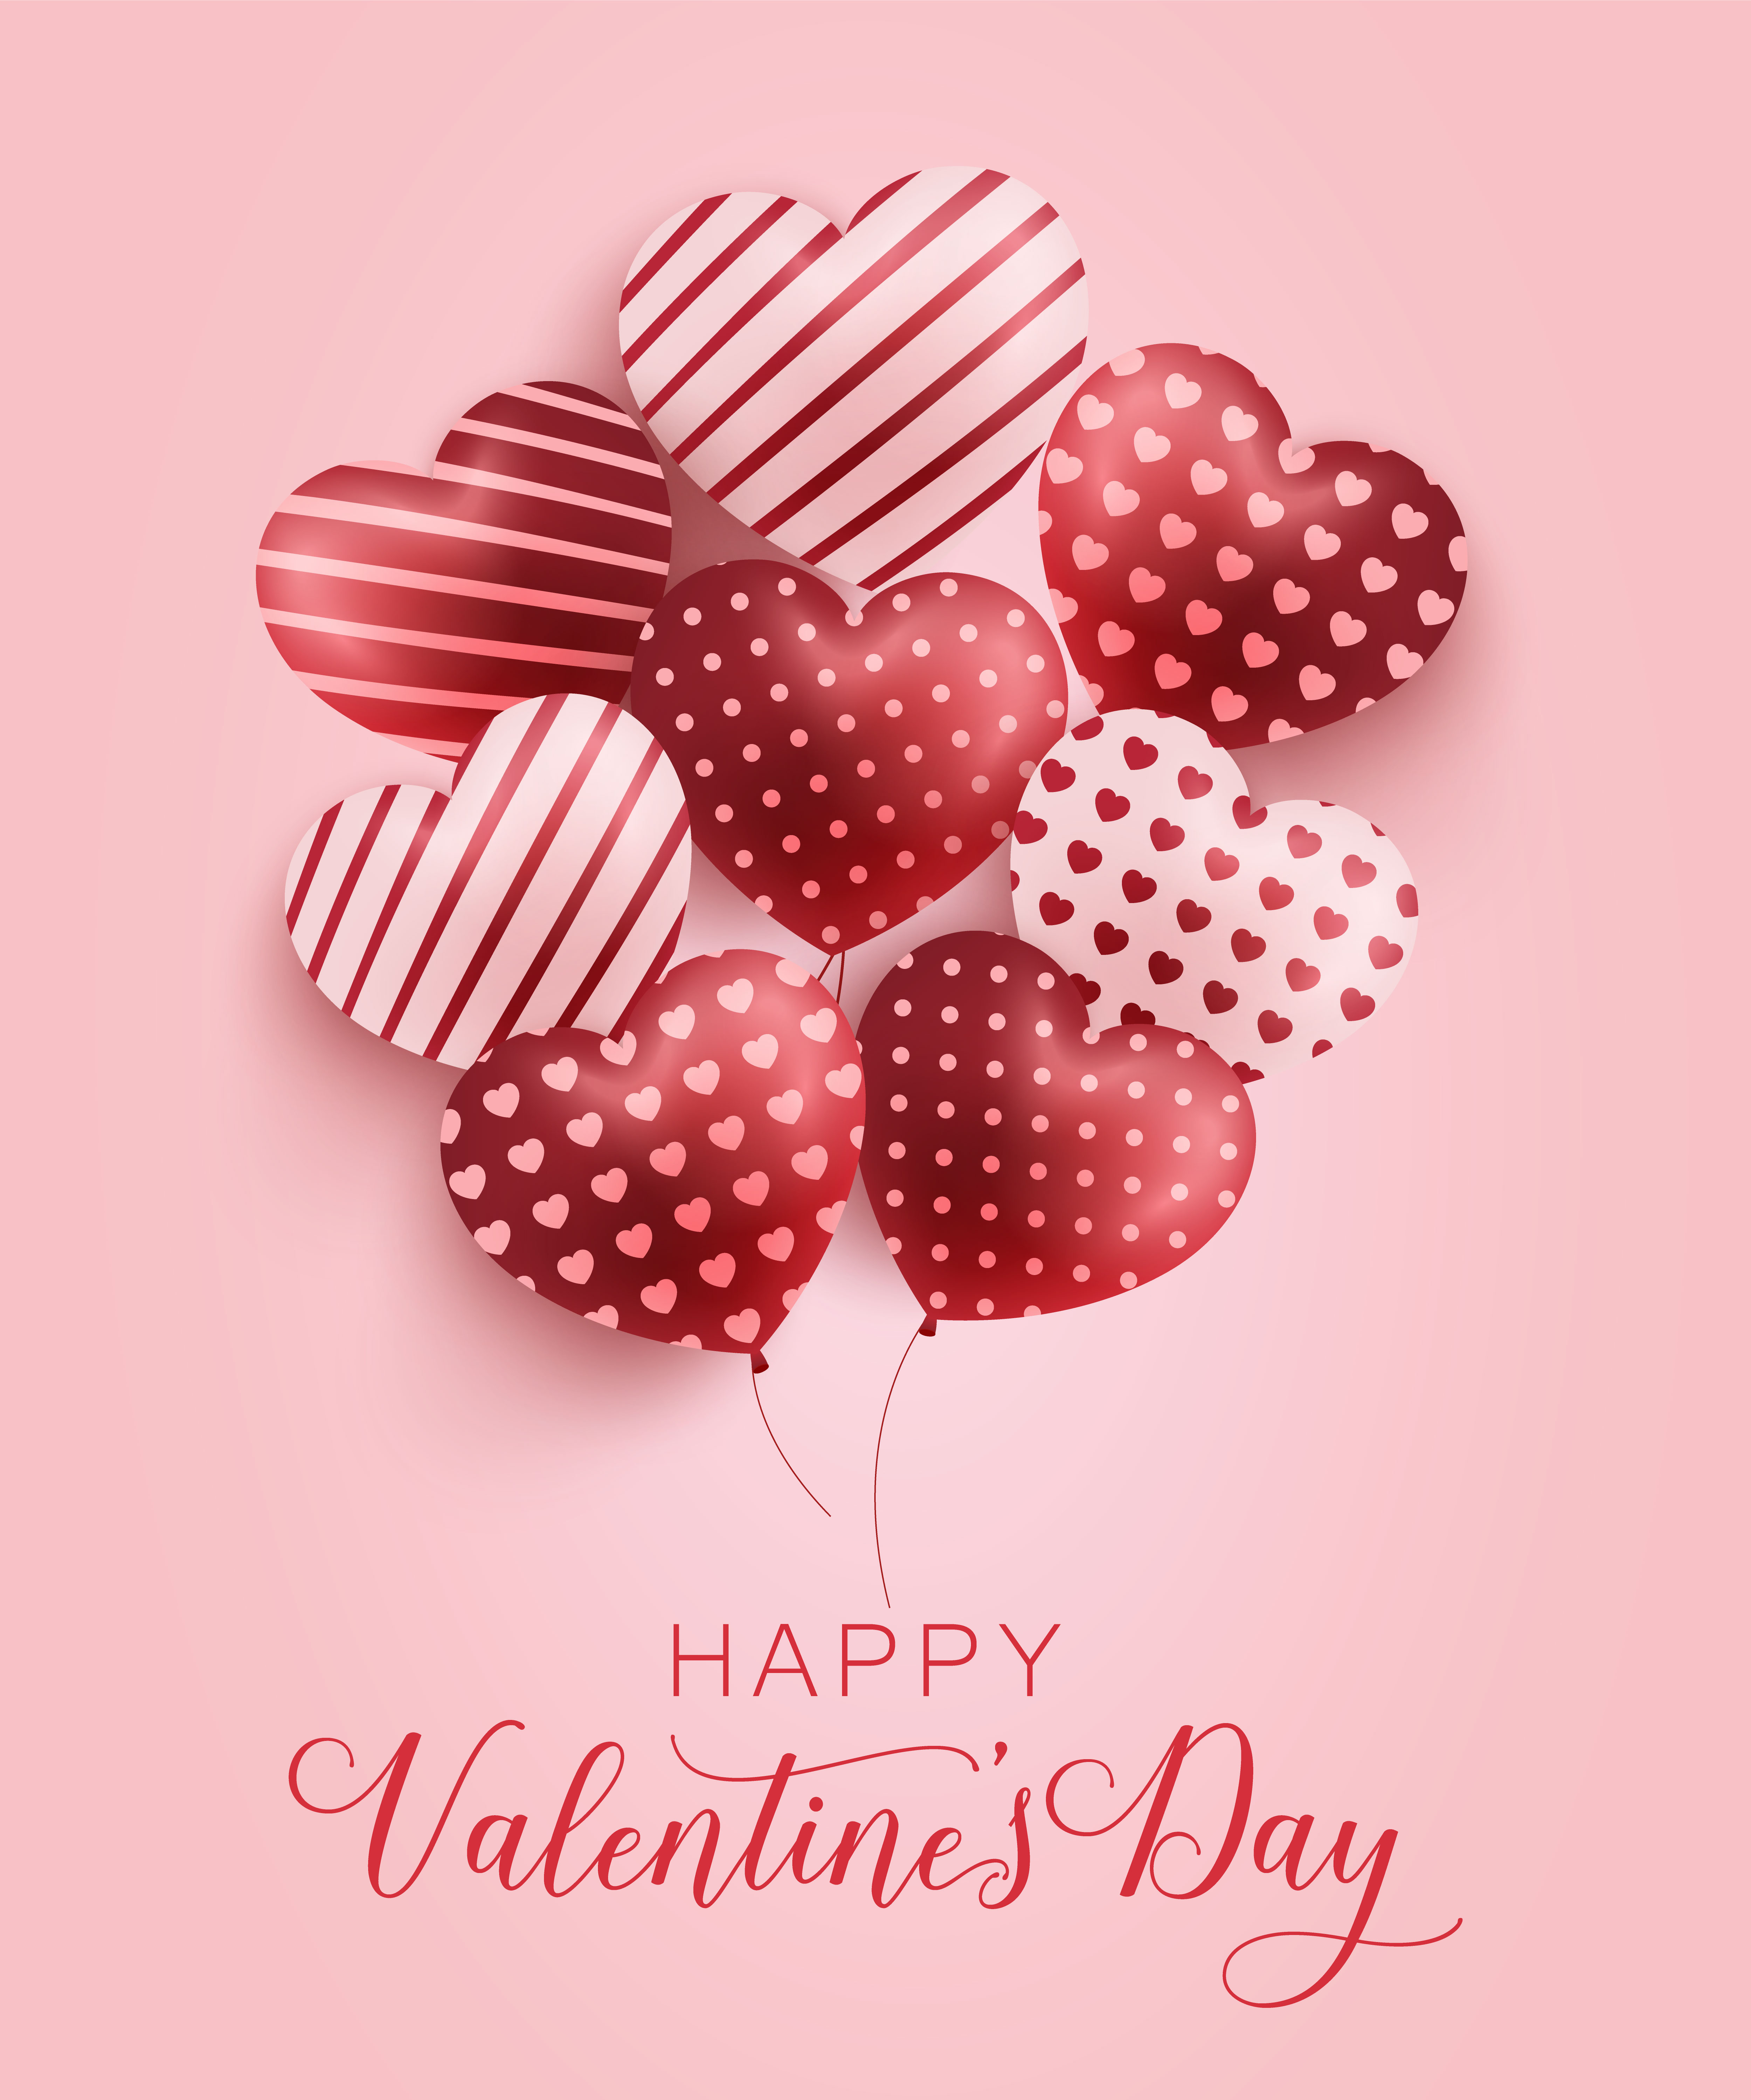 Happy Valentine's Day Wallpaper 4K, Red hearts